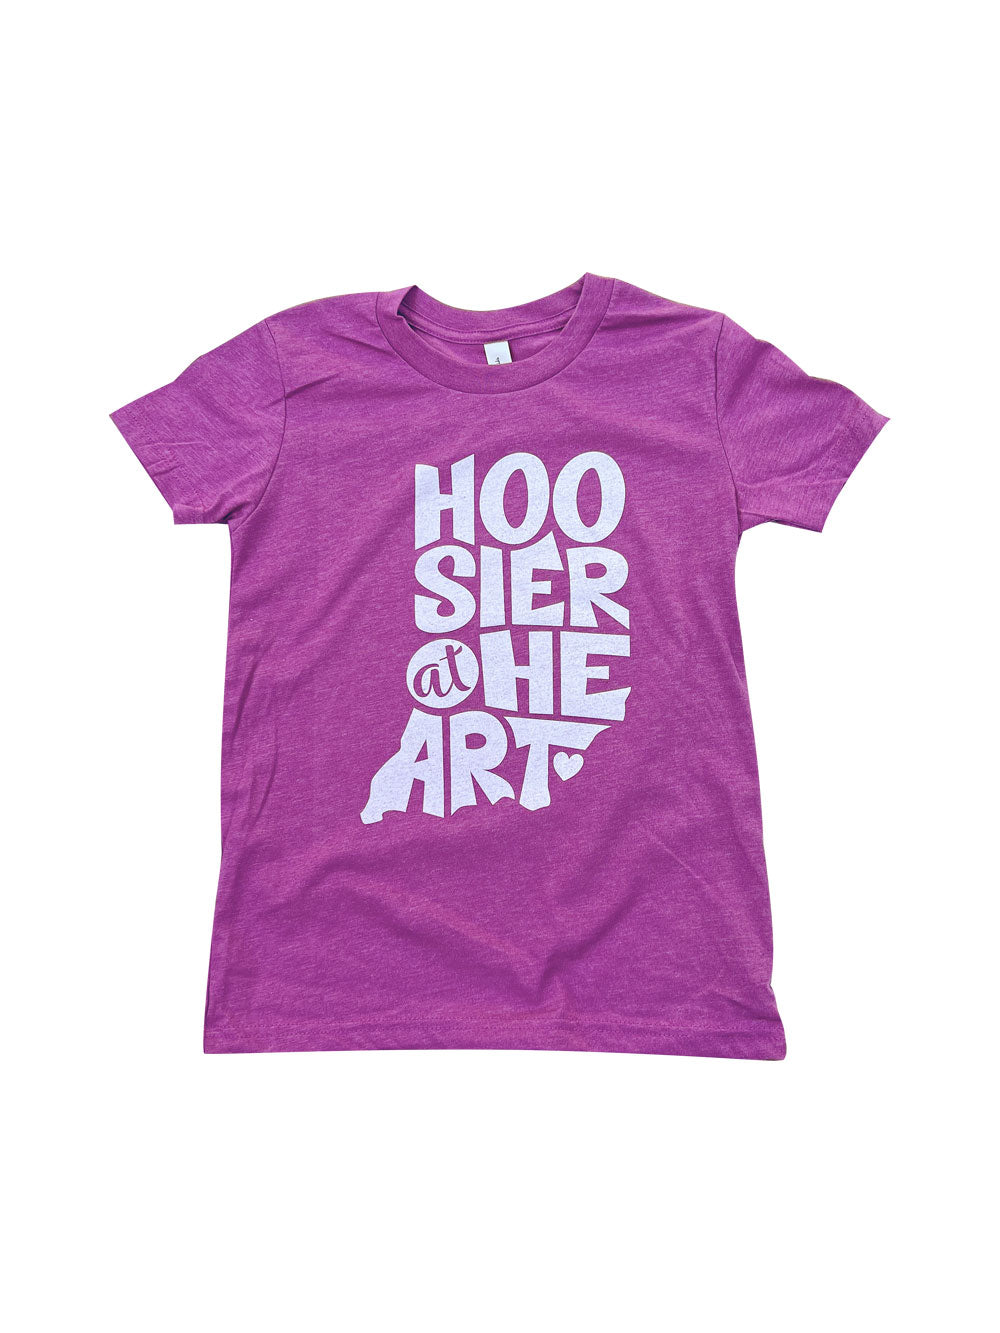 Hoosier at Heart magenta heather youth t-shirt